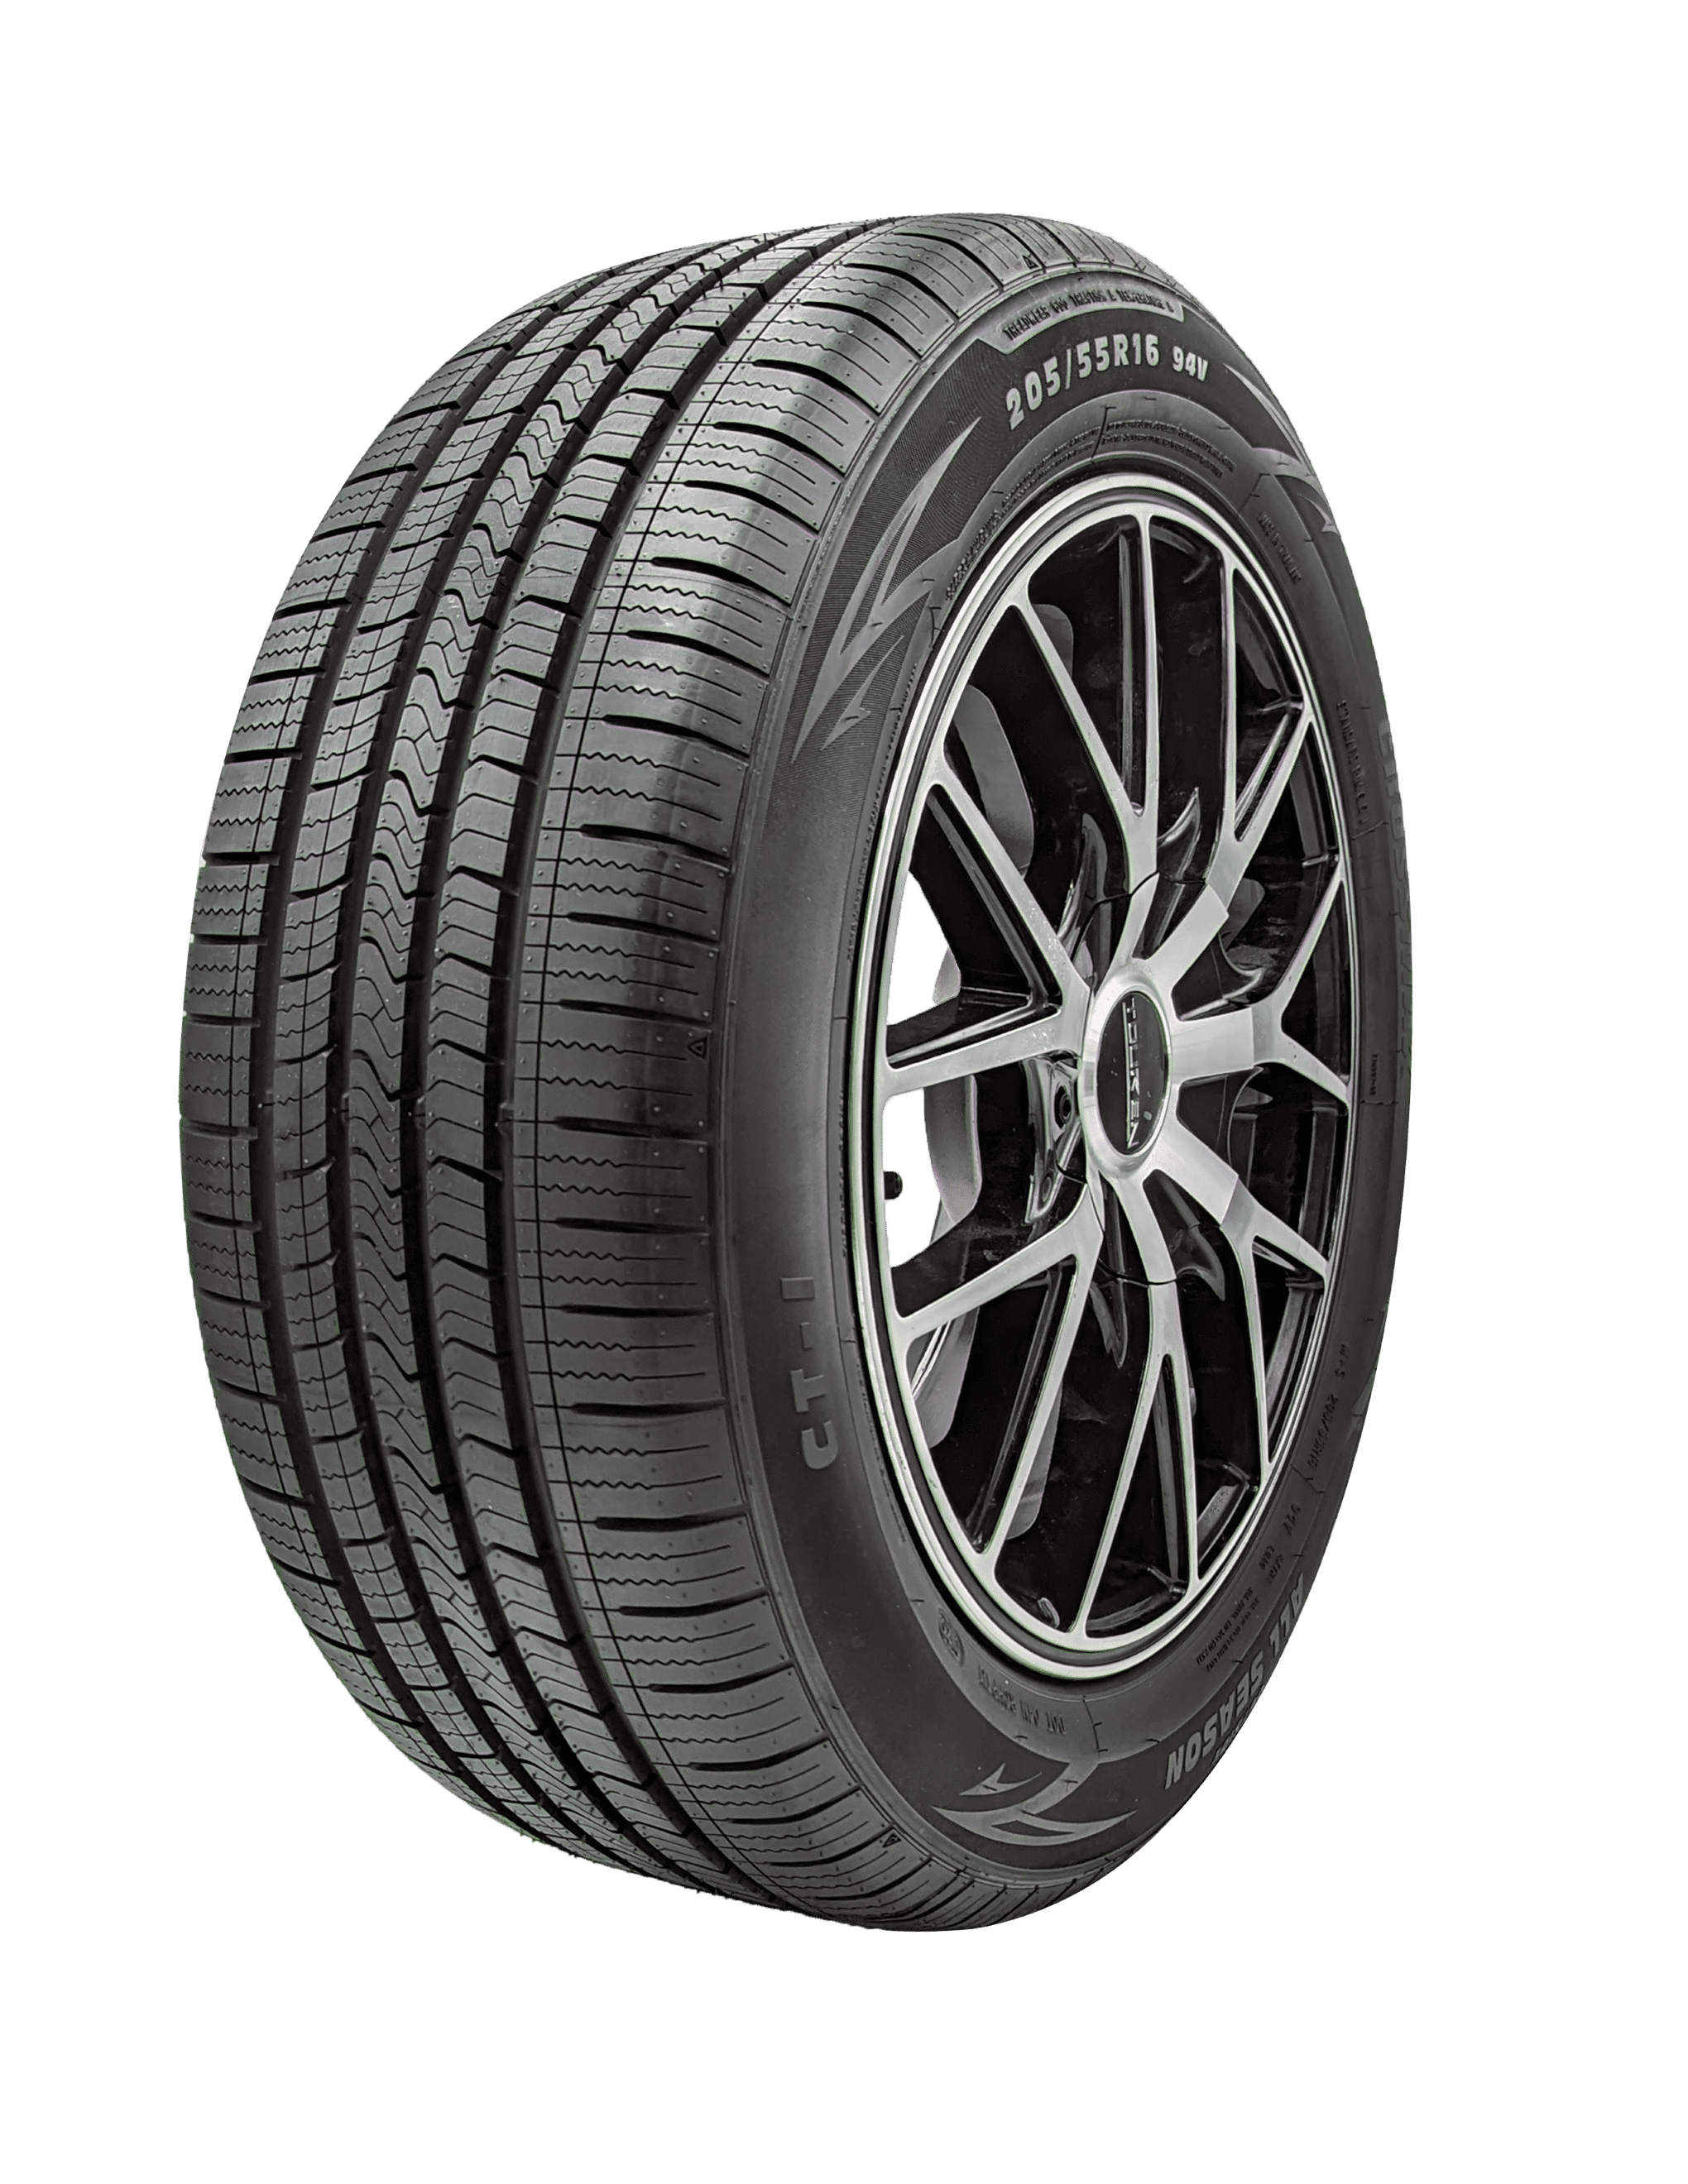 Crossmax 195/65R15 91H CT-1 All-Season Tire